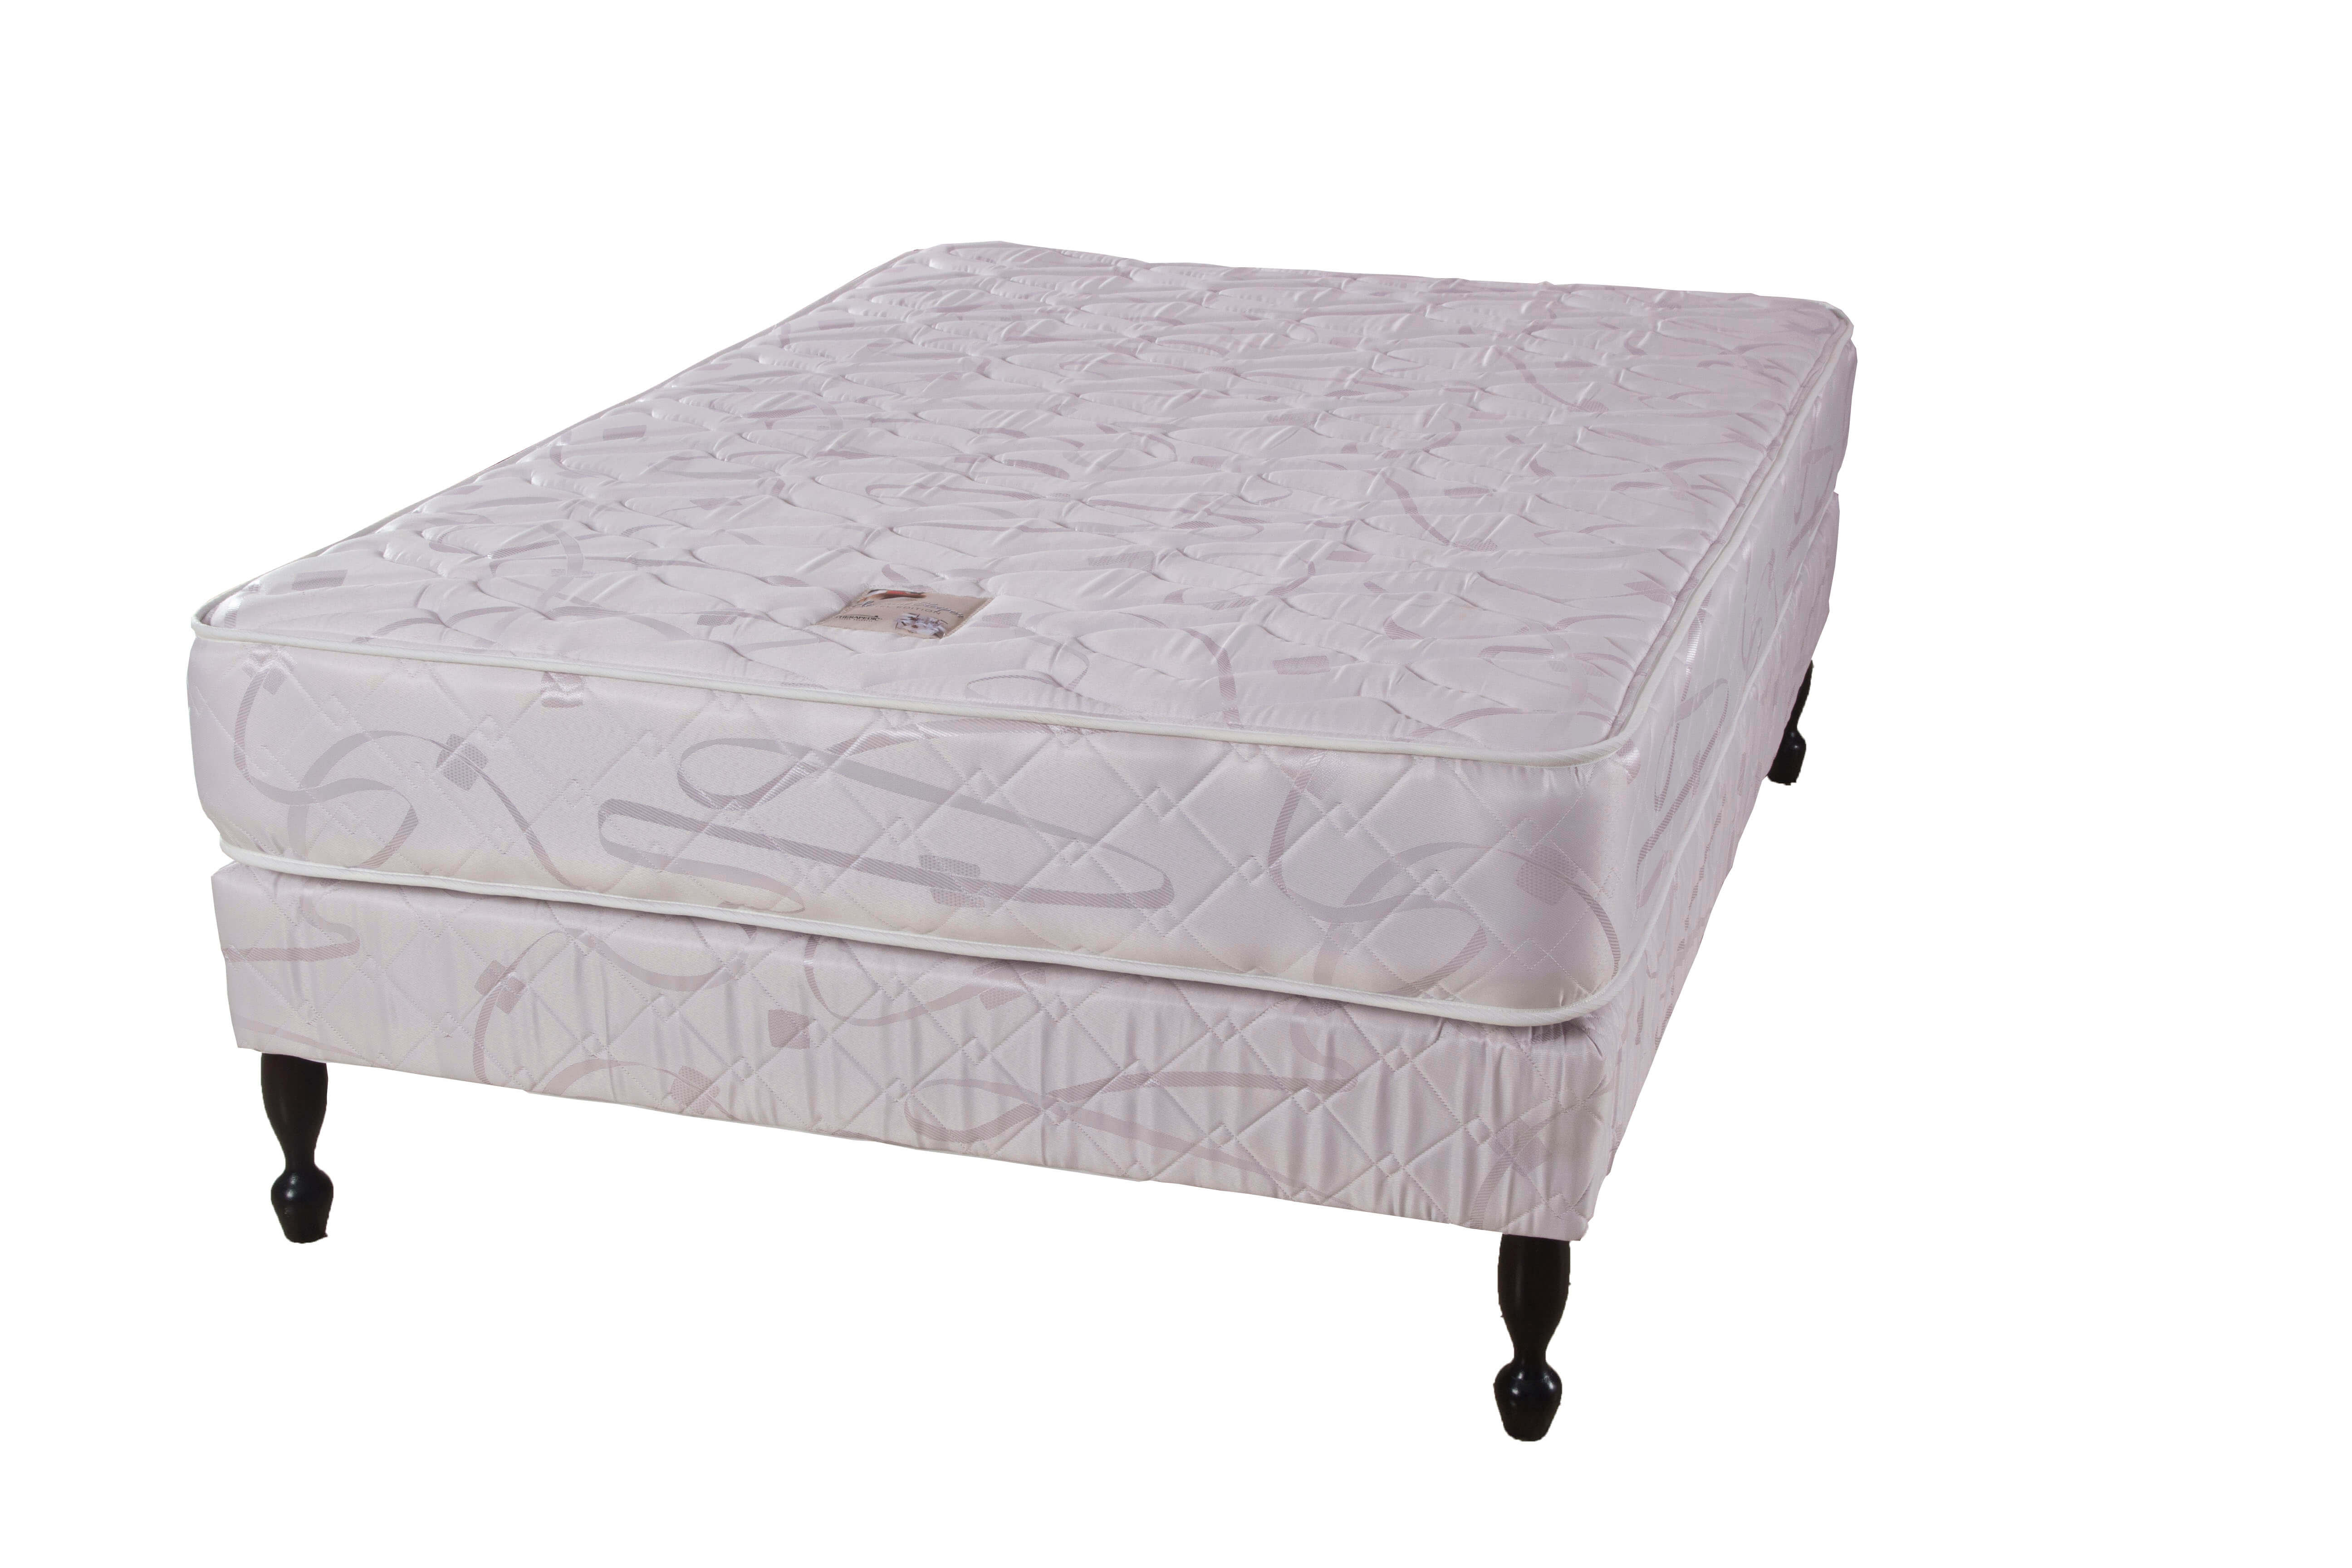 courts jamaica pillow top mattress